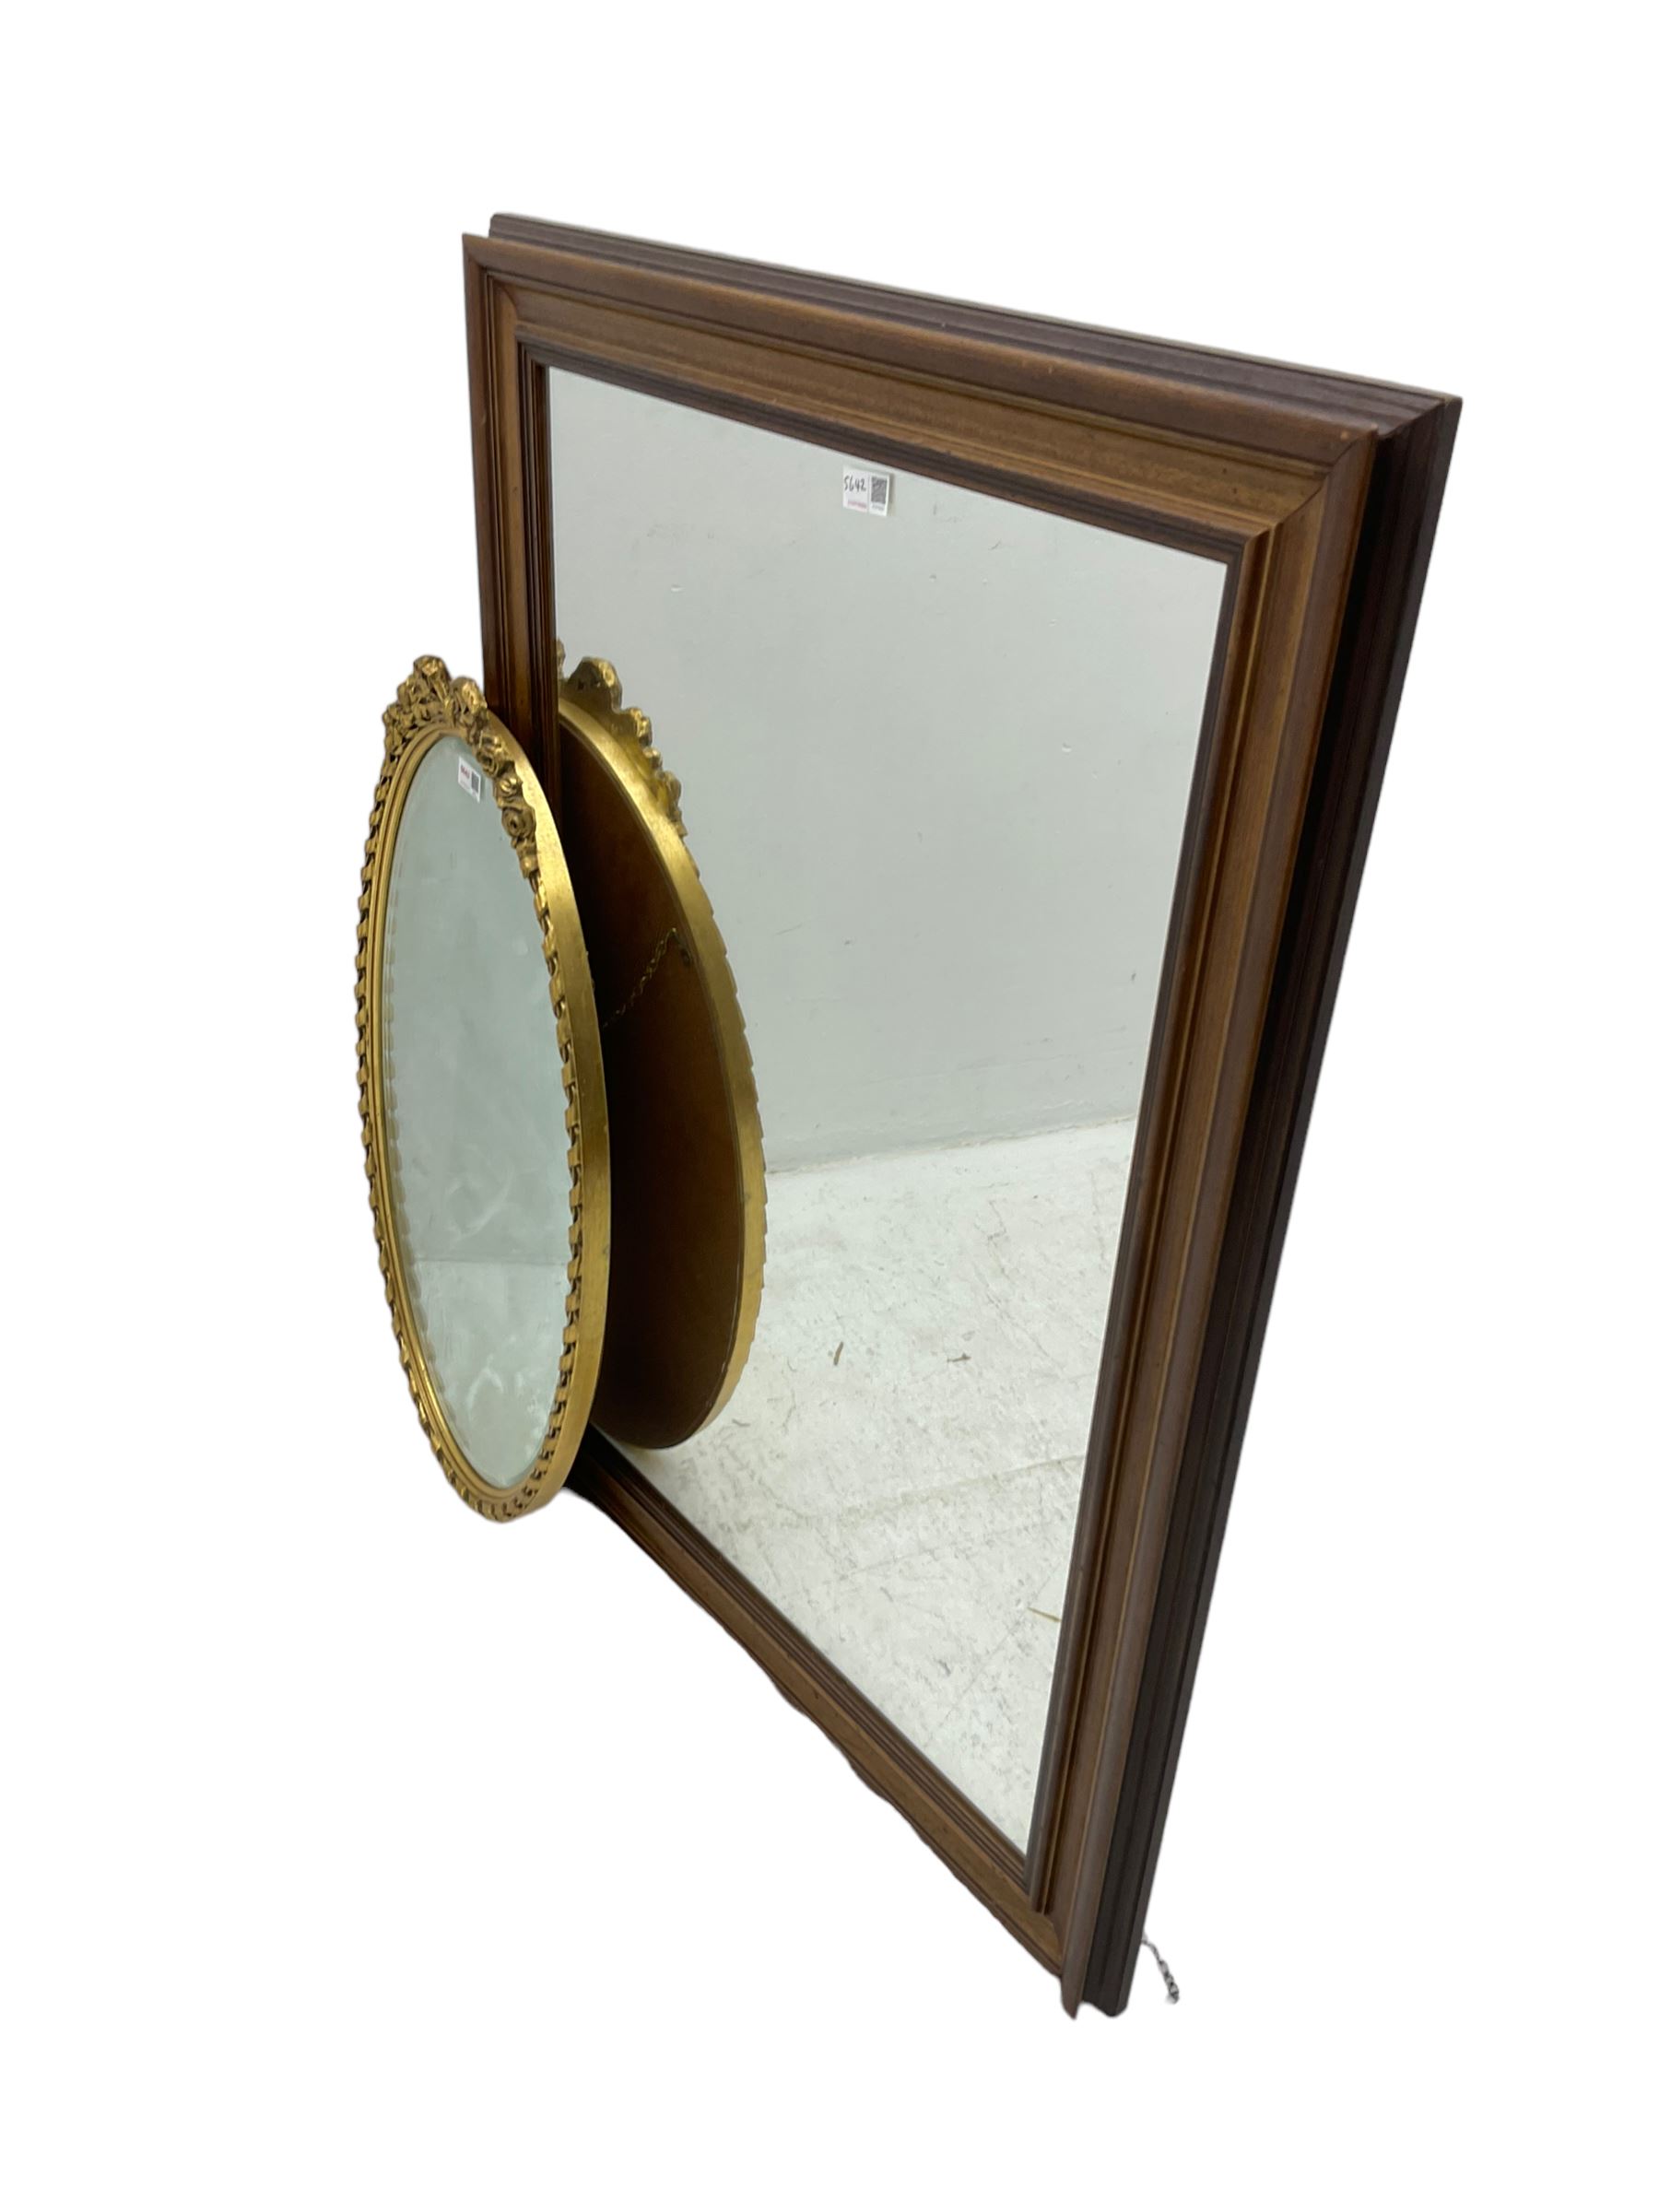 Victorian design gilt framed oval mirror - Image 2 of 2